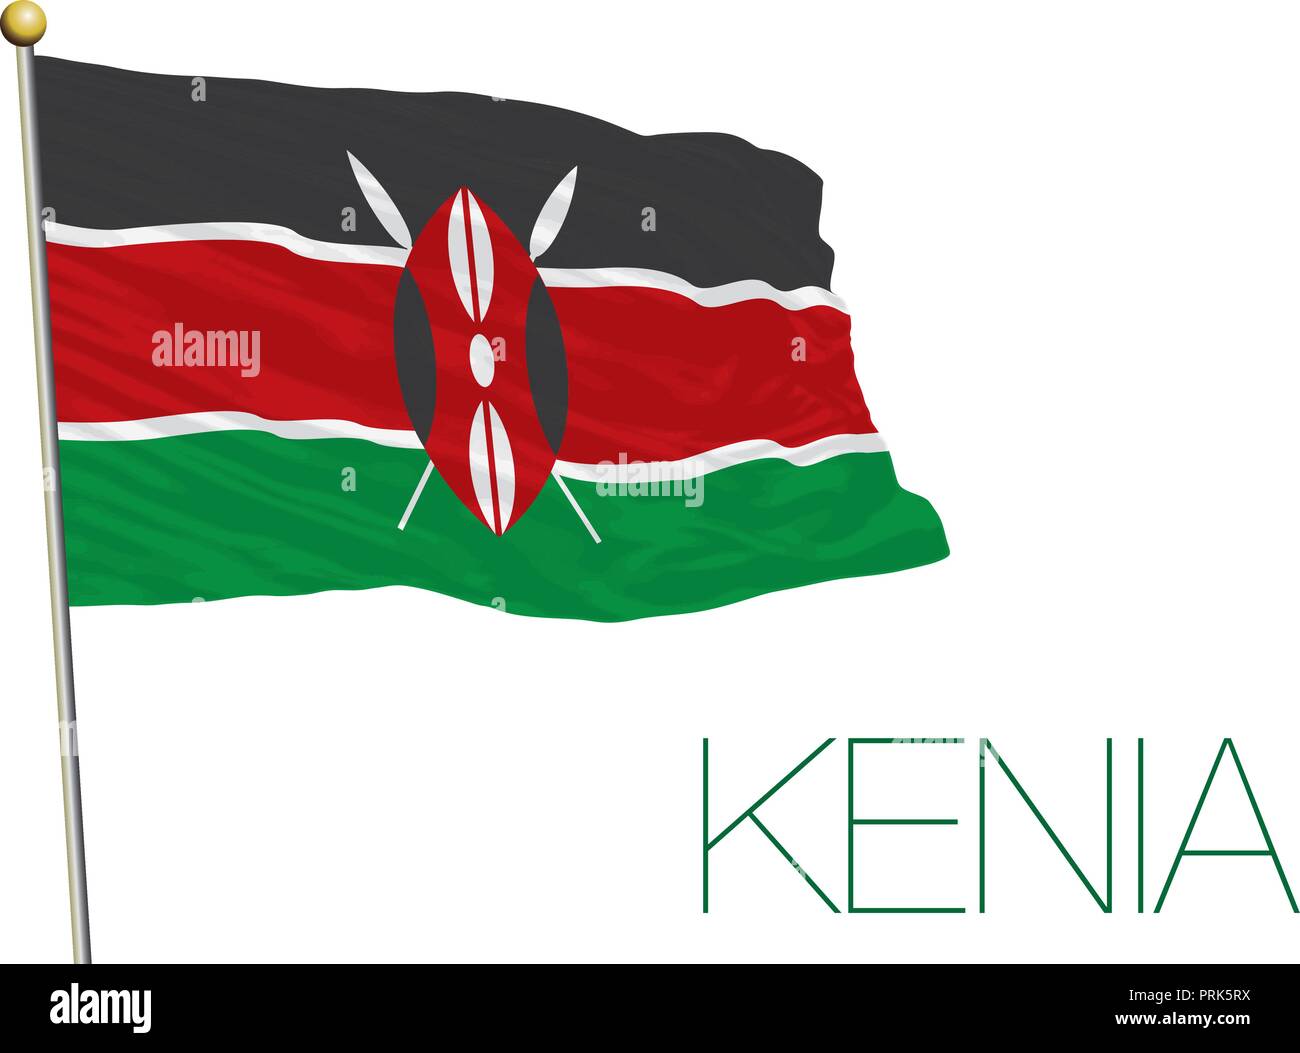 Kenia official flag, vector illustration Stock Vector